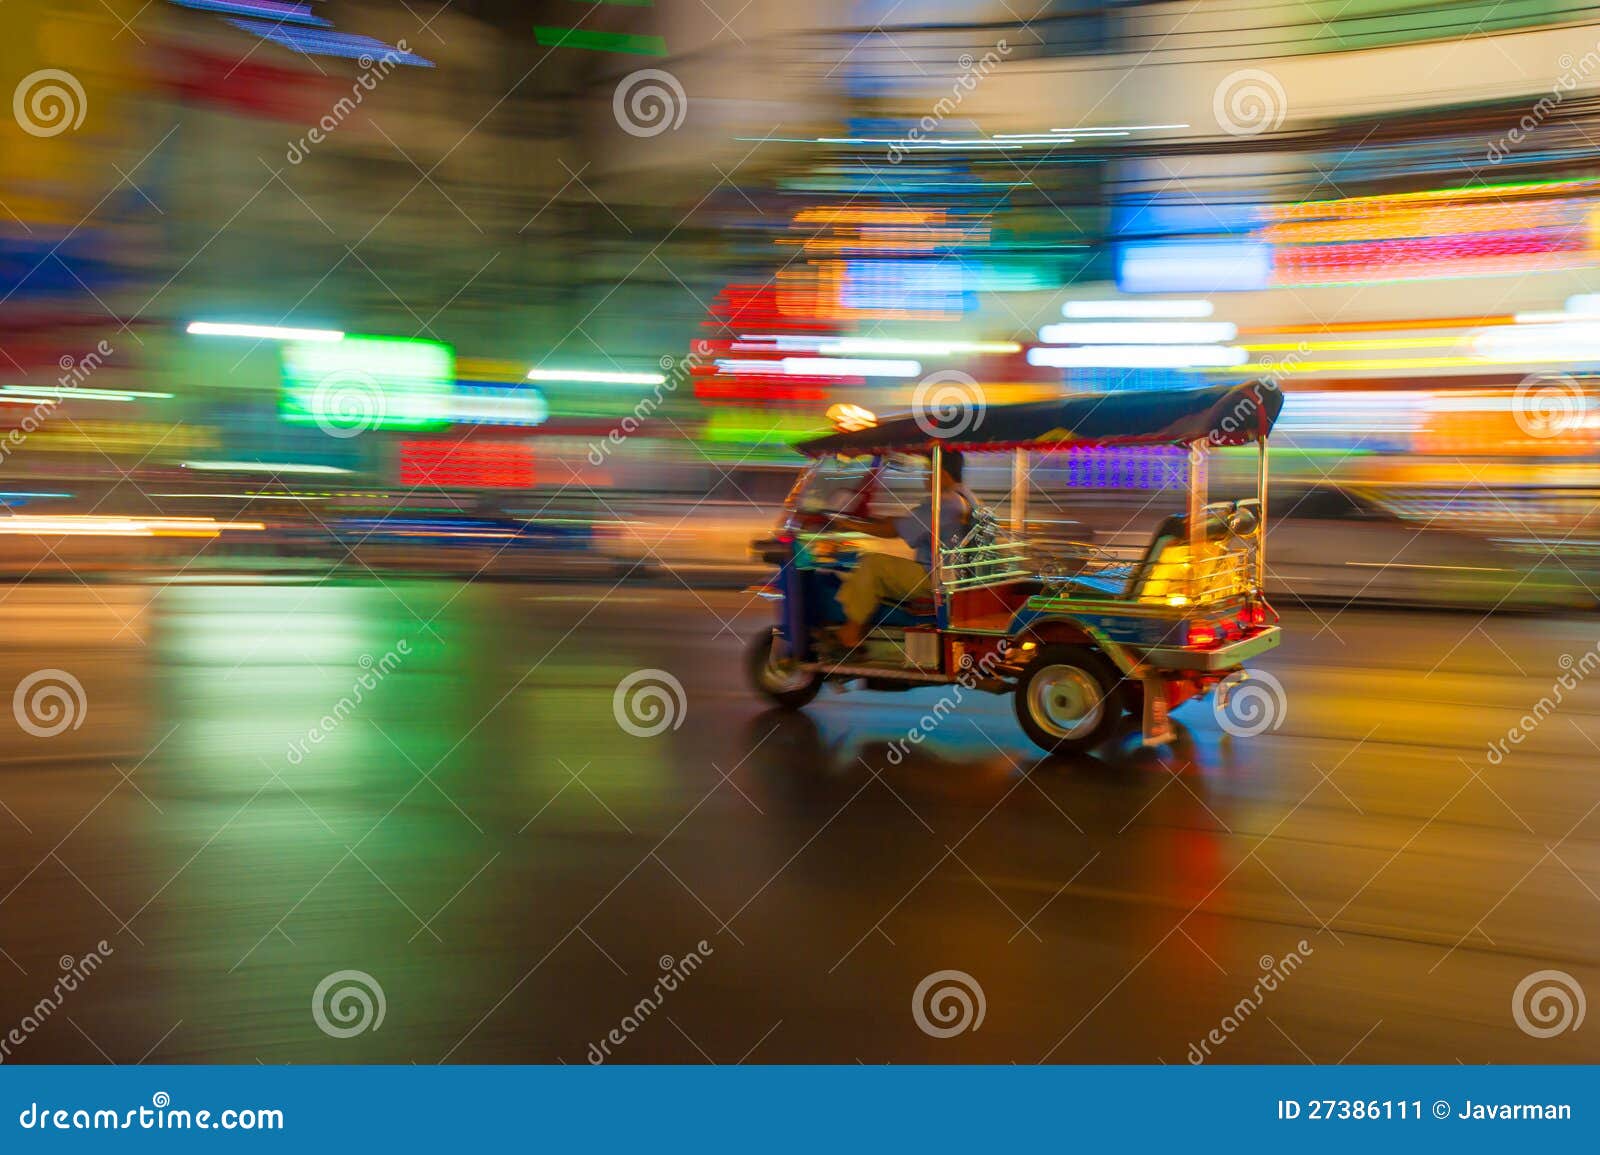 tuk-tuk in motion blur, bangkok, thailand